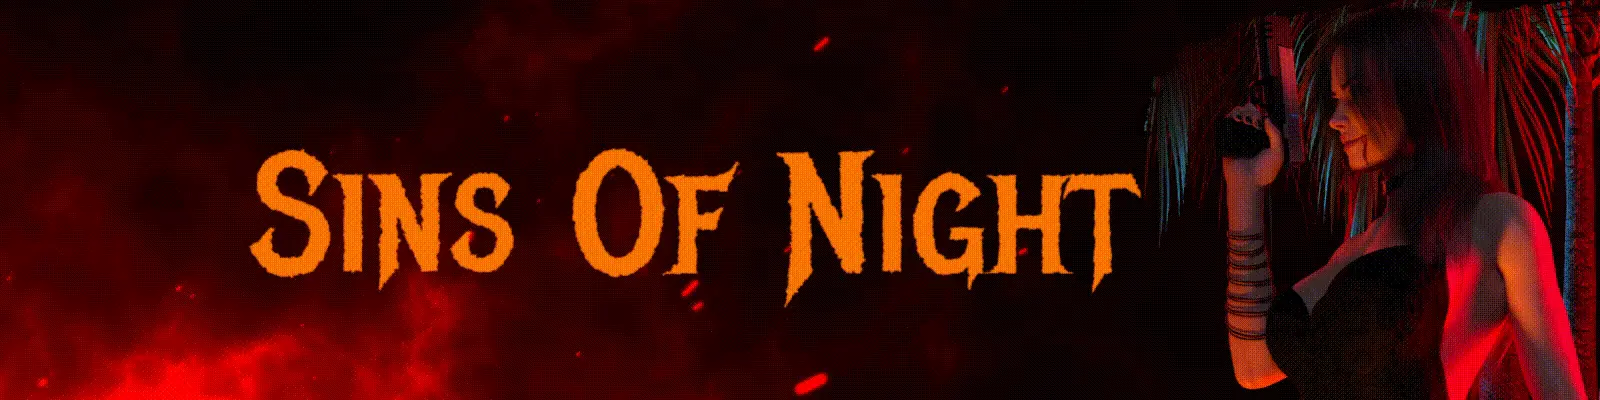 Sins of Night main image